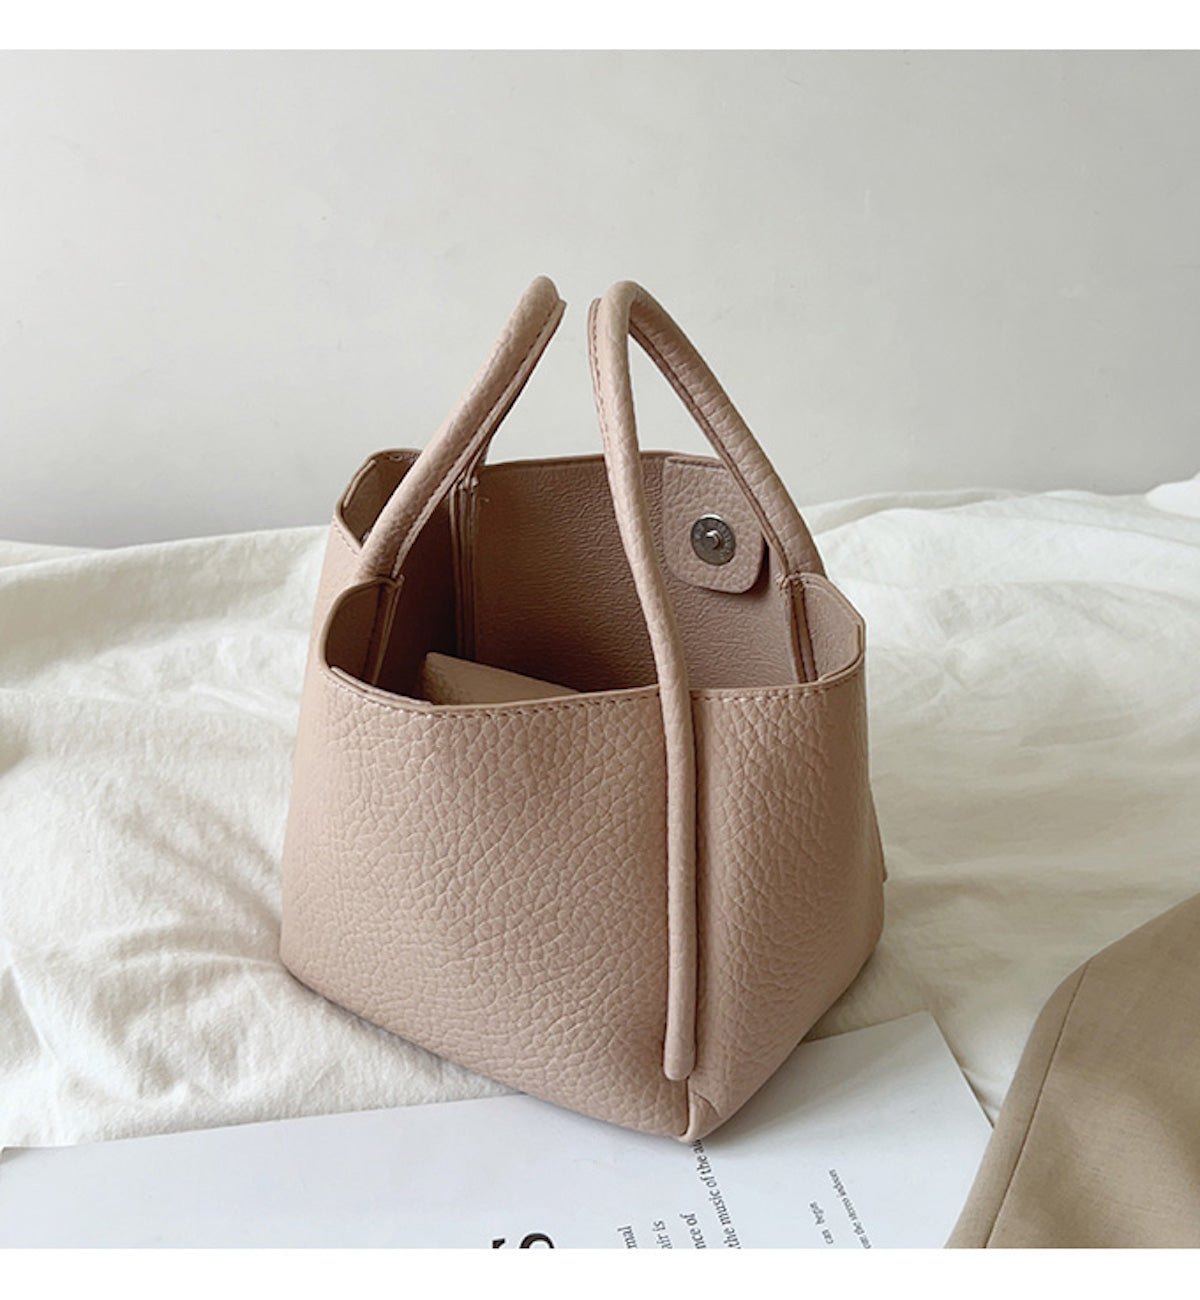 Elena Handbags Soft Leather Tote Bucket Bag Light Brown